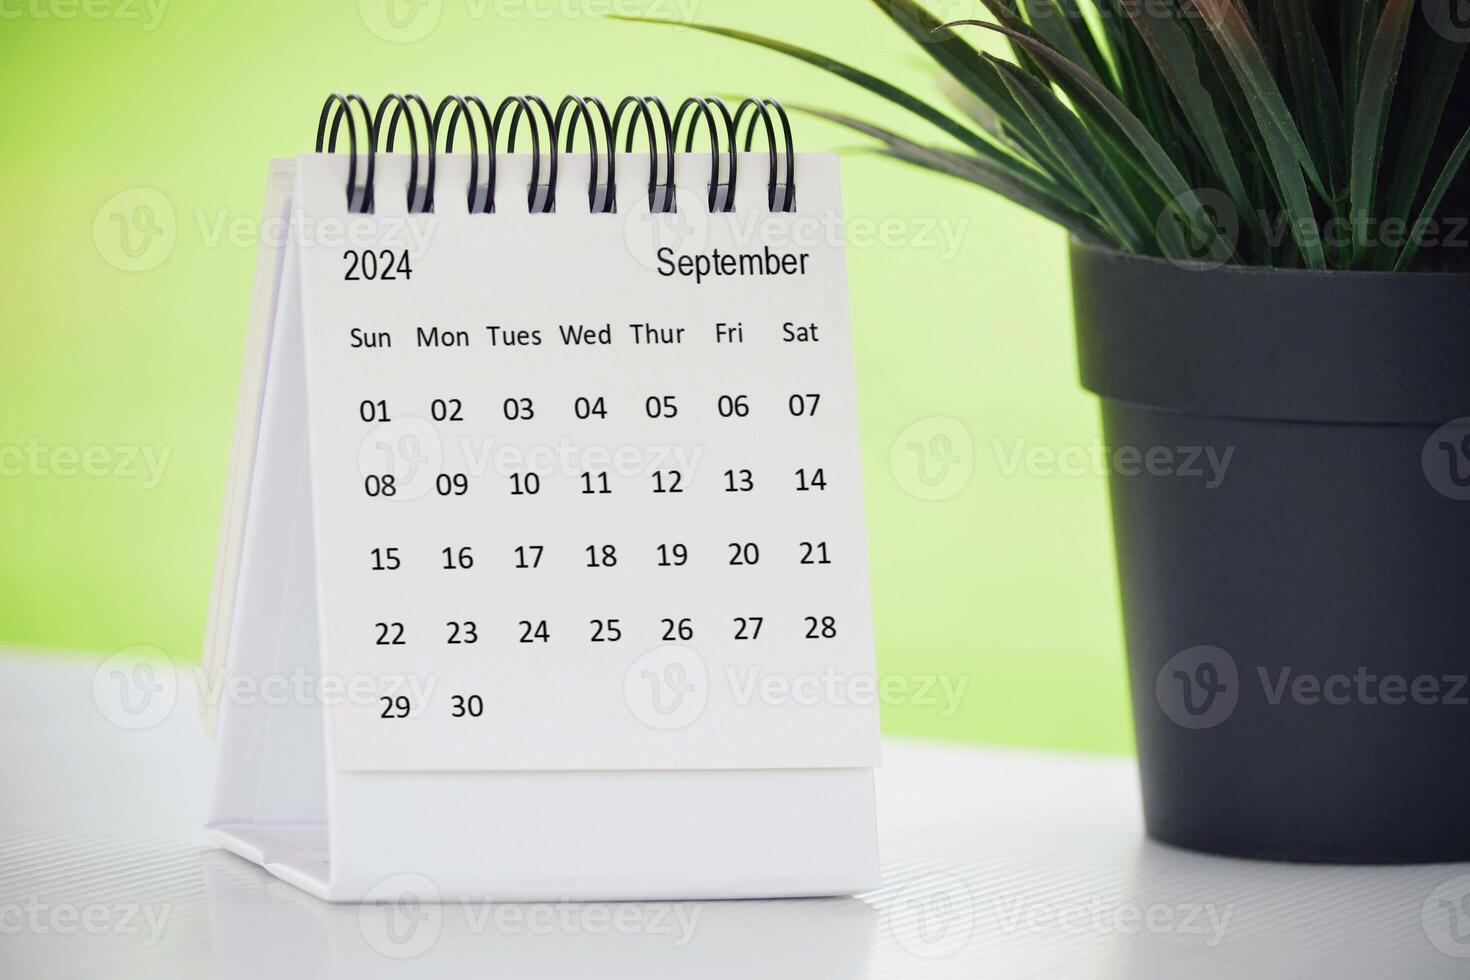 septiembre 2024 escritorio calendario con en conserva planta en un escritorio con verde antecedentes. foto